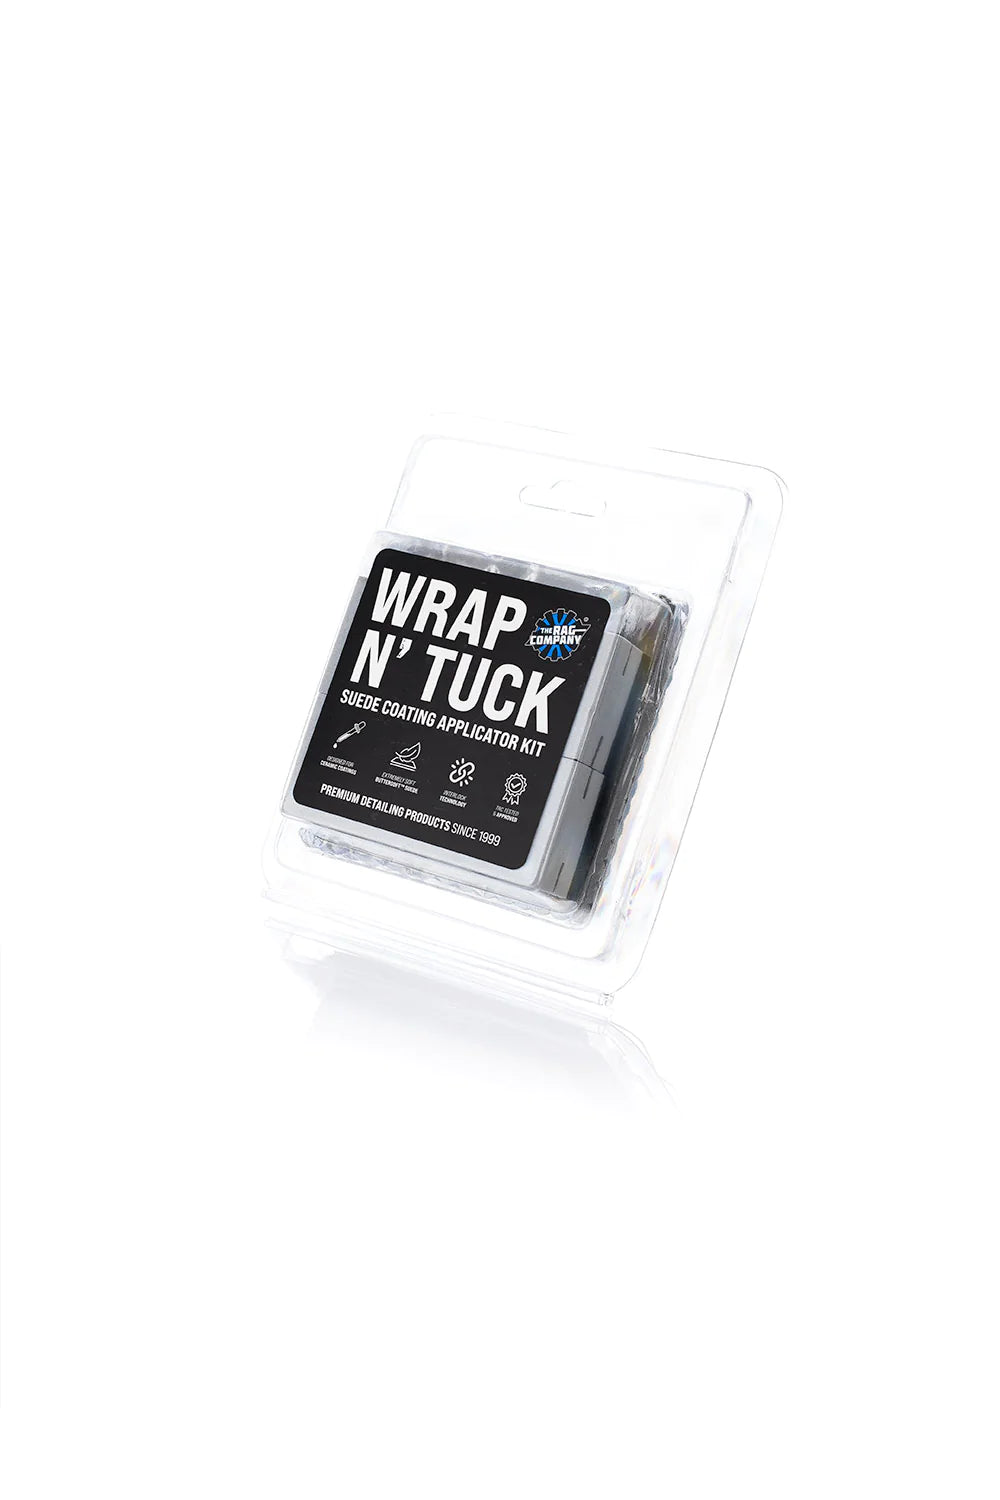 The Rag Company - Wrap N' Tuck Suede Coating Applicator Kit